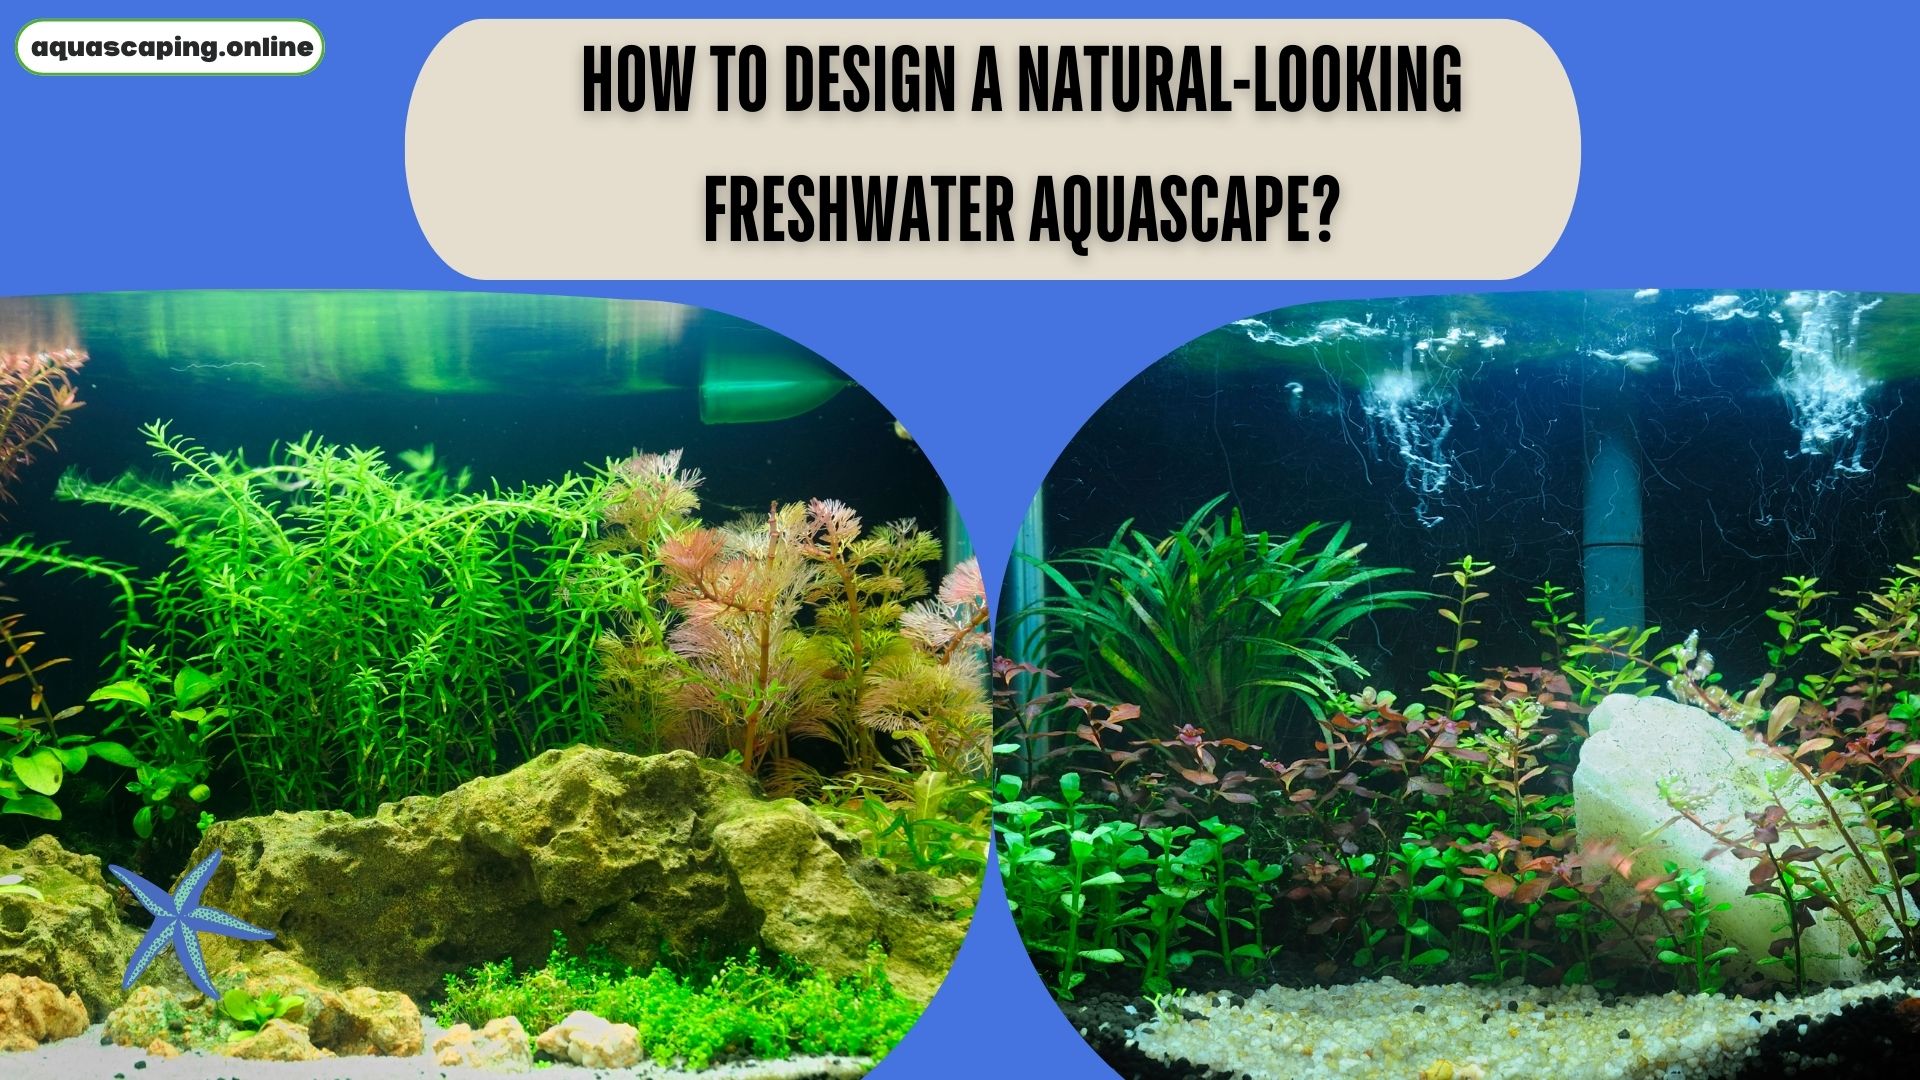 Design a natural-looking freshwater aquascape